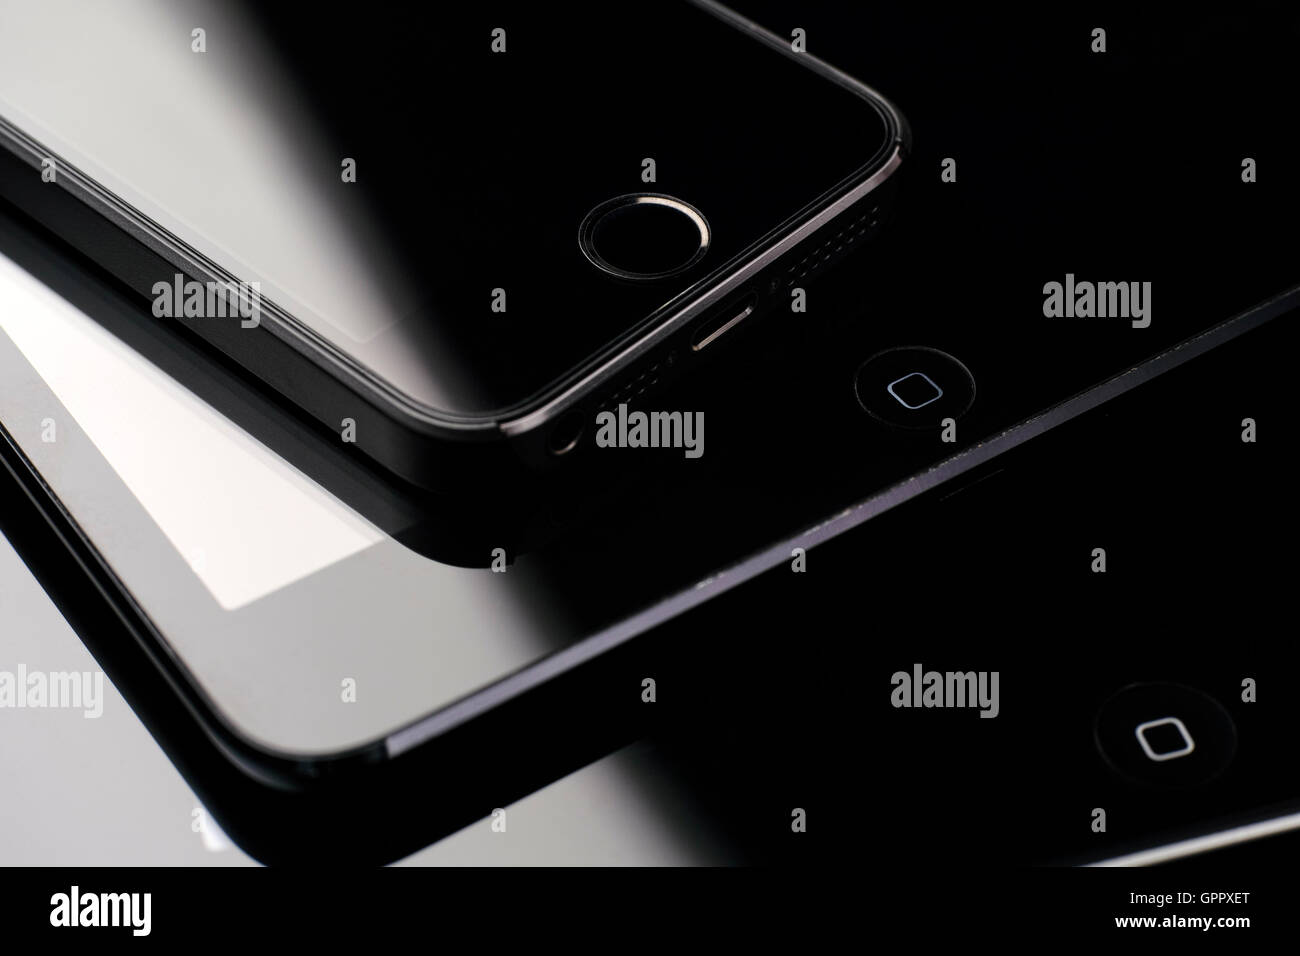 Tambow, Russische Föderation - 26. Februar 2015 Closeup des Stapels von Apple-Geräten - iPhone 5 s, iPad Mini und iPad 2. Studio gedreht. Stockfoto